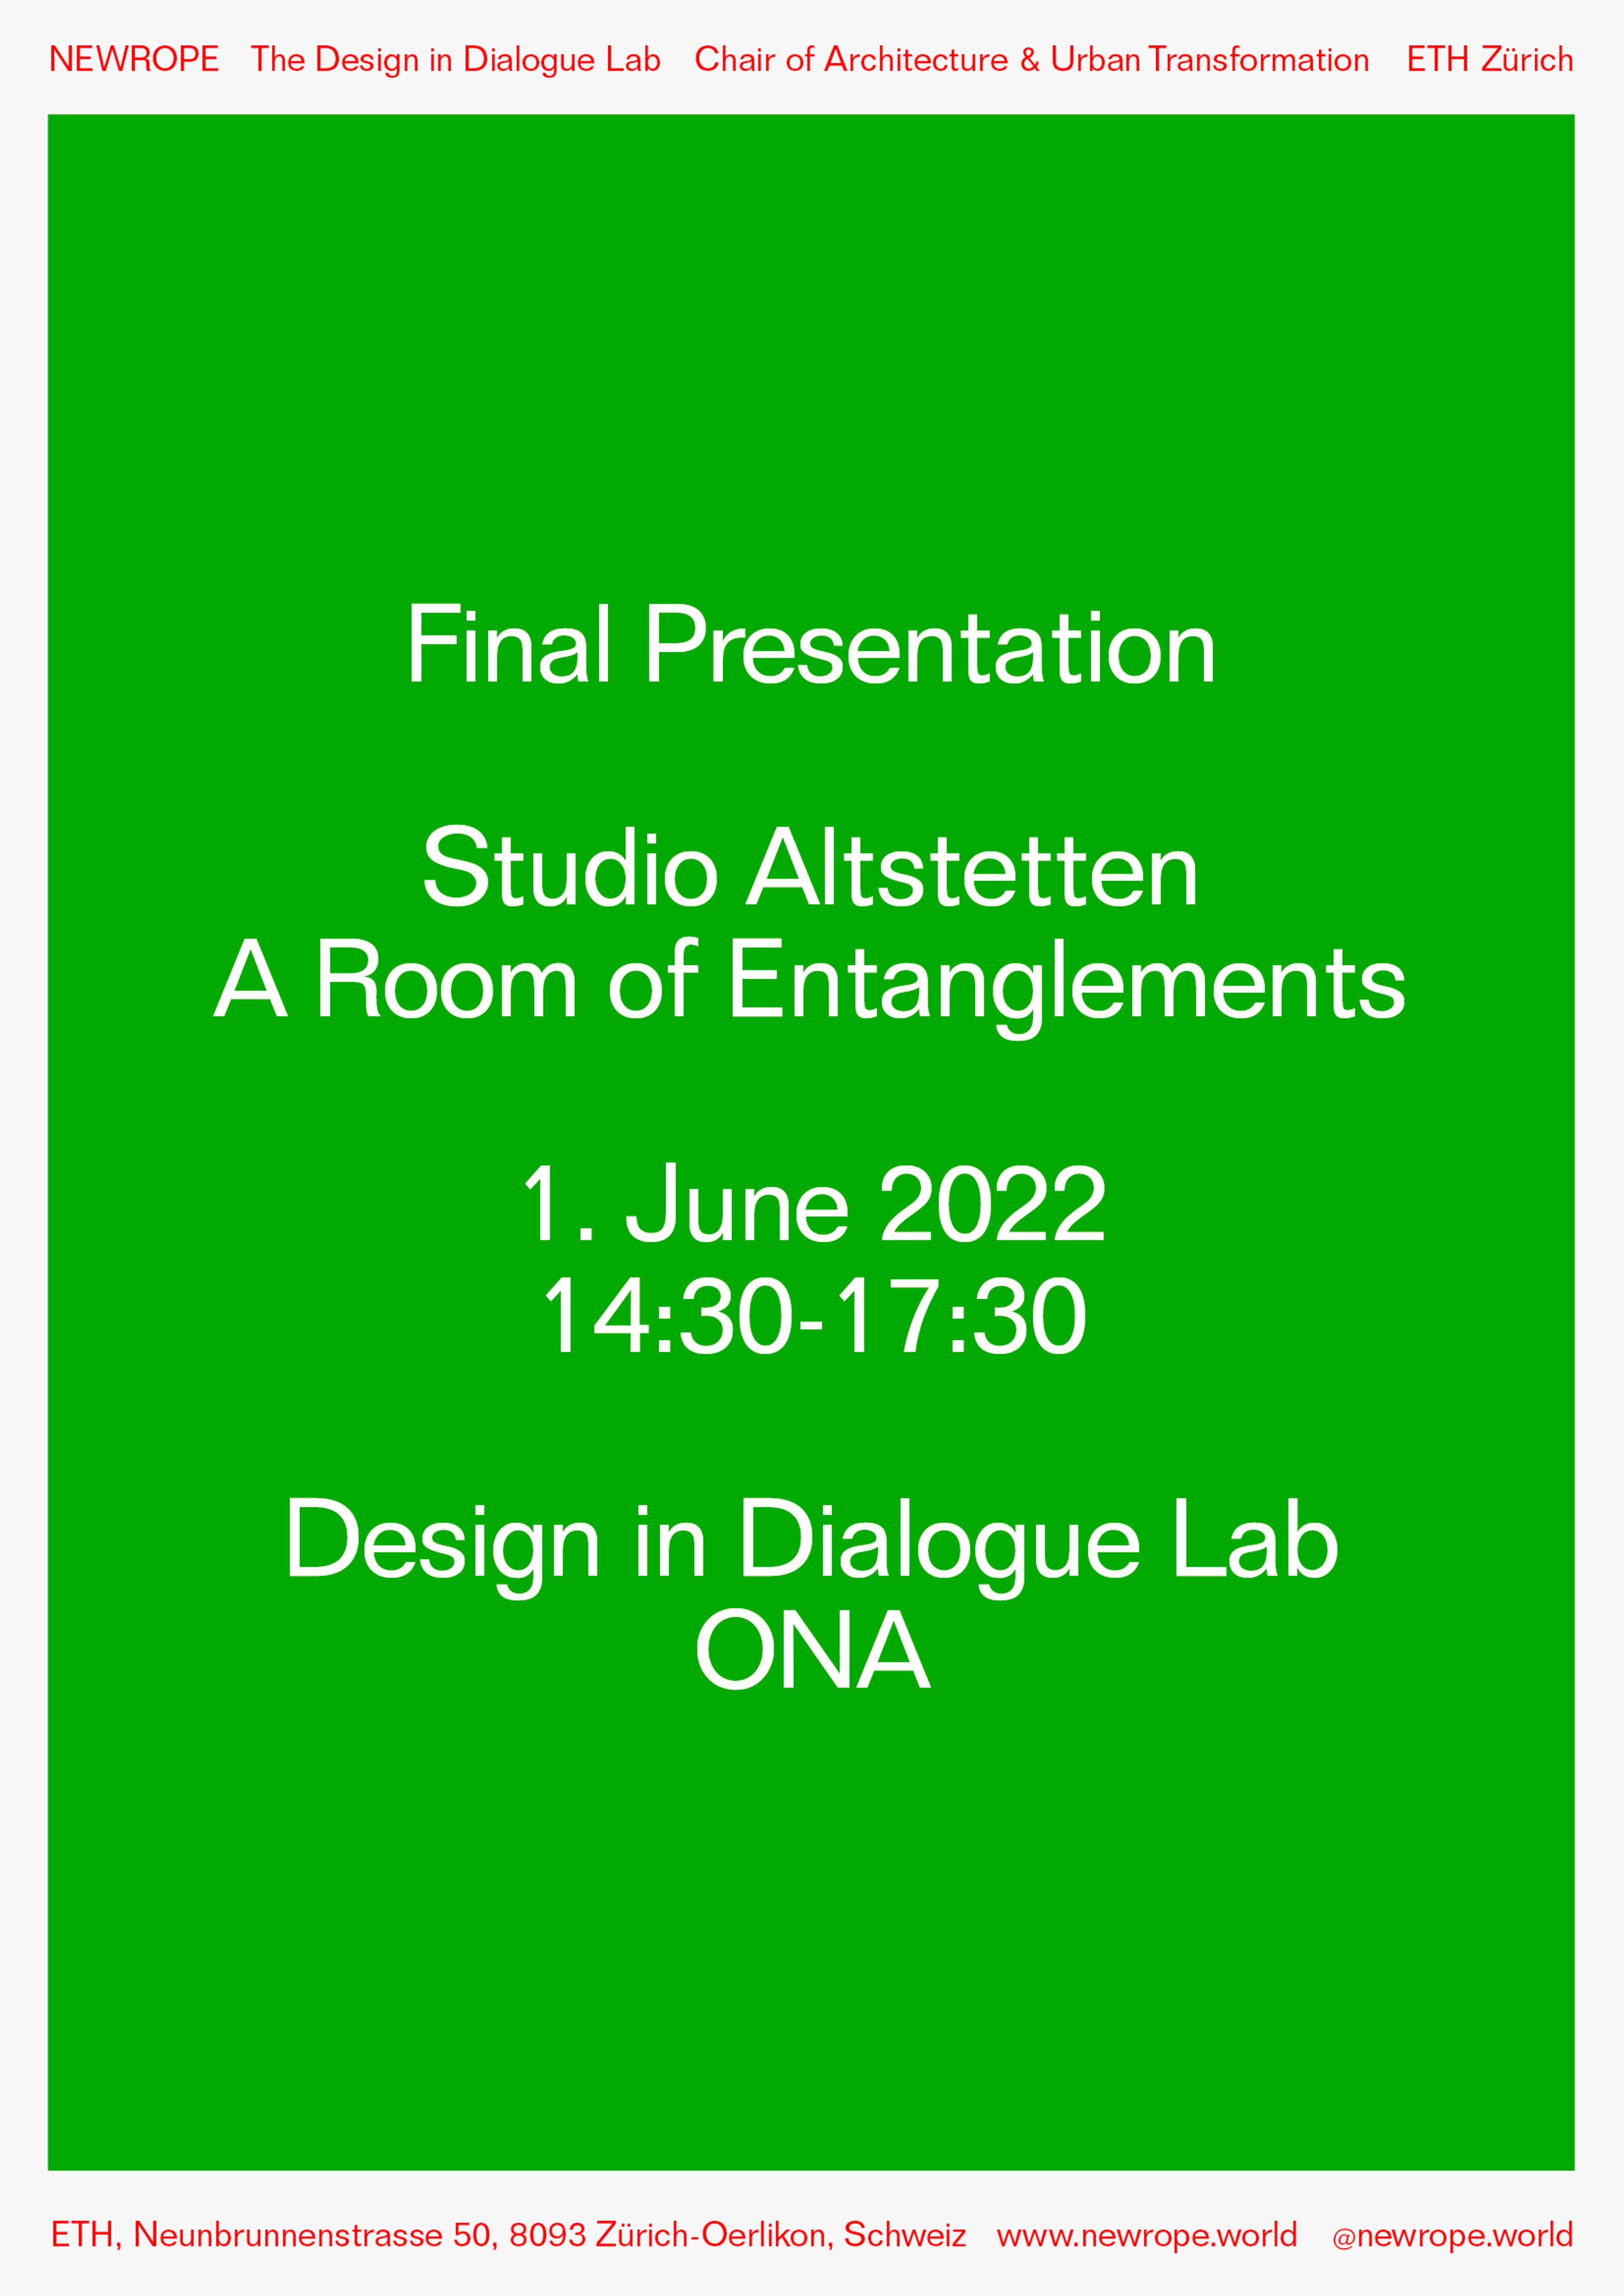 Announcement: Final Presentation, Studio Altstetten – A Room of Entanglements